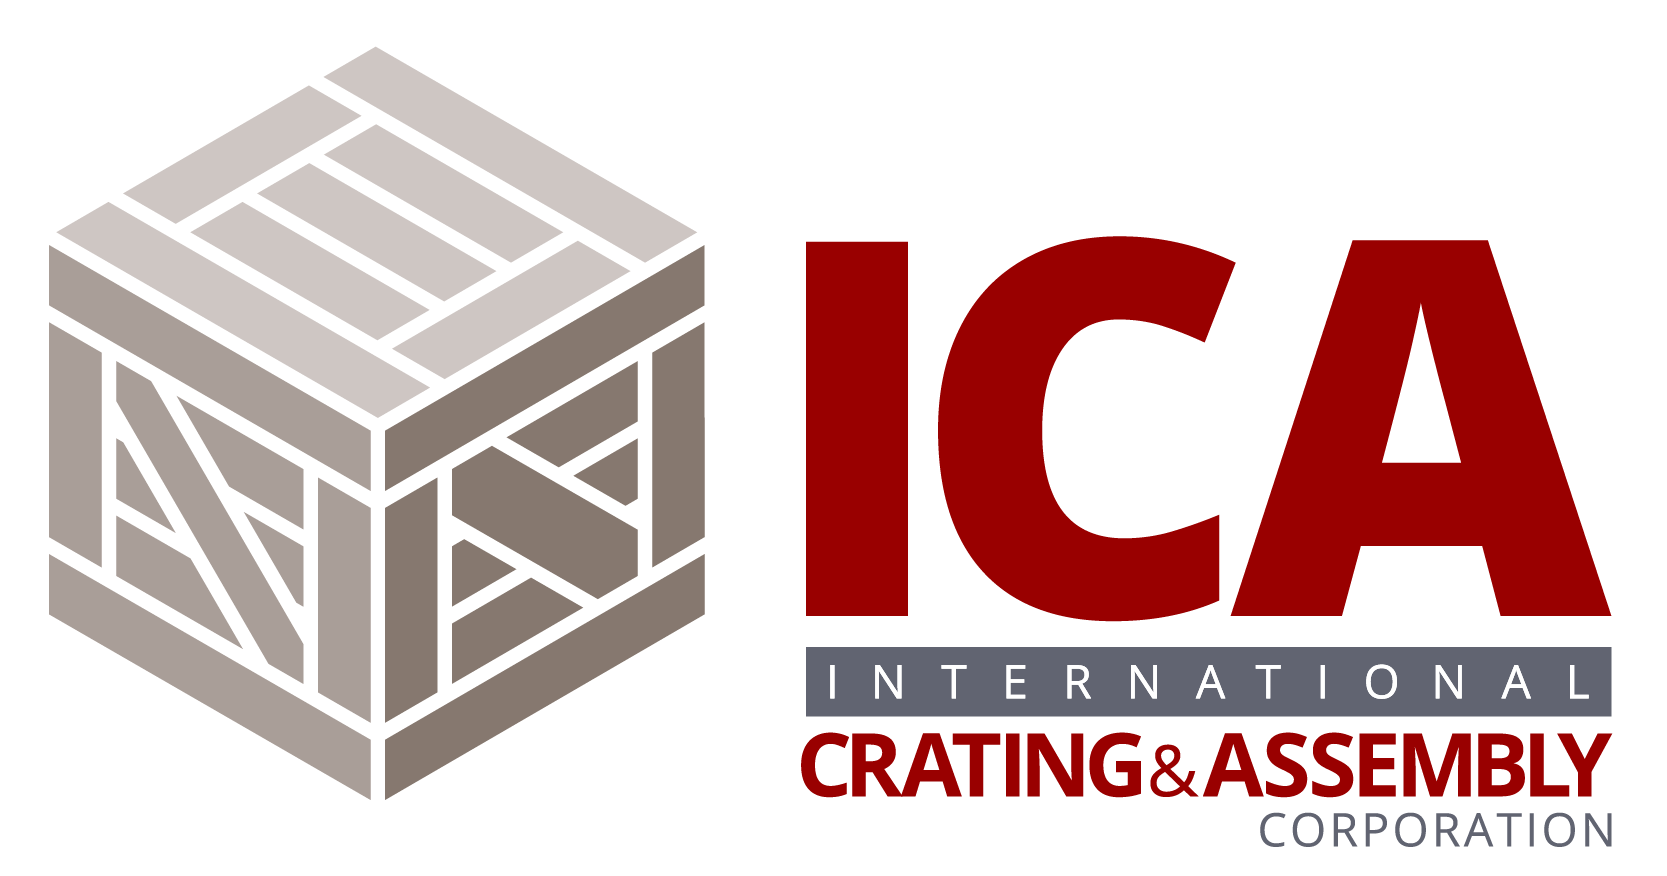 ICA Corporation